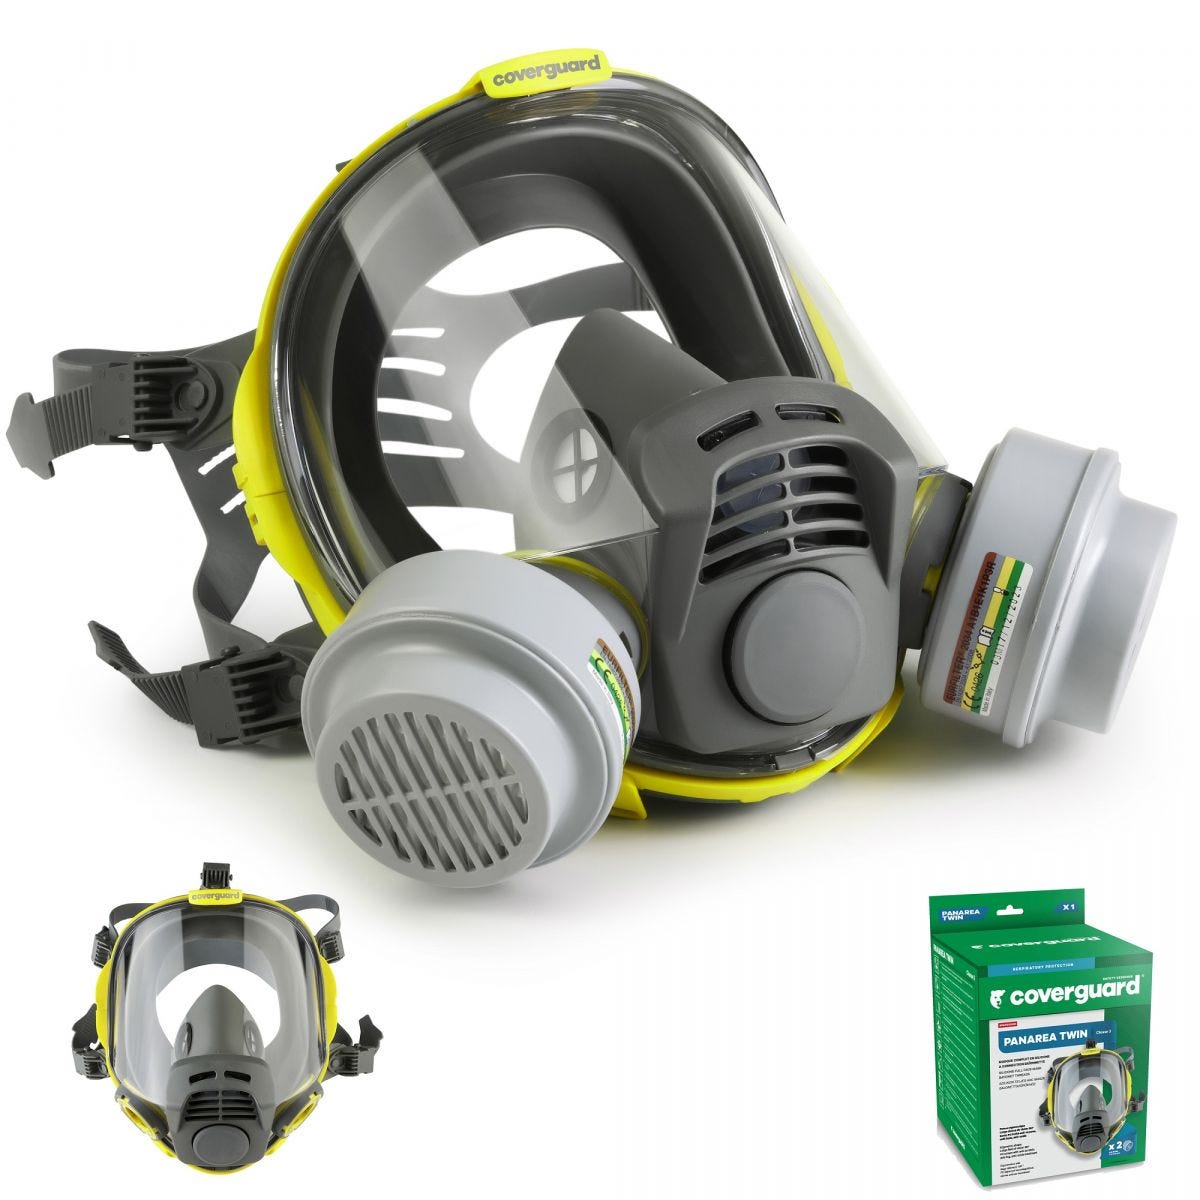 Masque respiratoire PANAREA TWIN en silicone Bi-Cartouches bayonnette Classe 3 - COVERGUARD 0